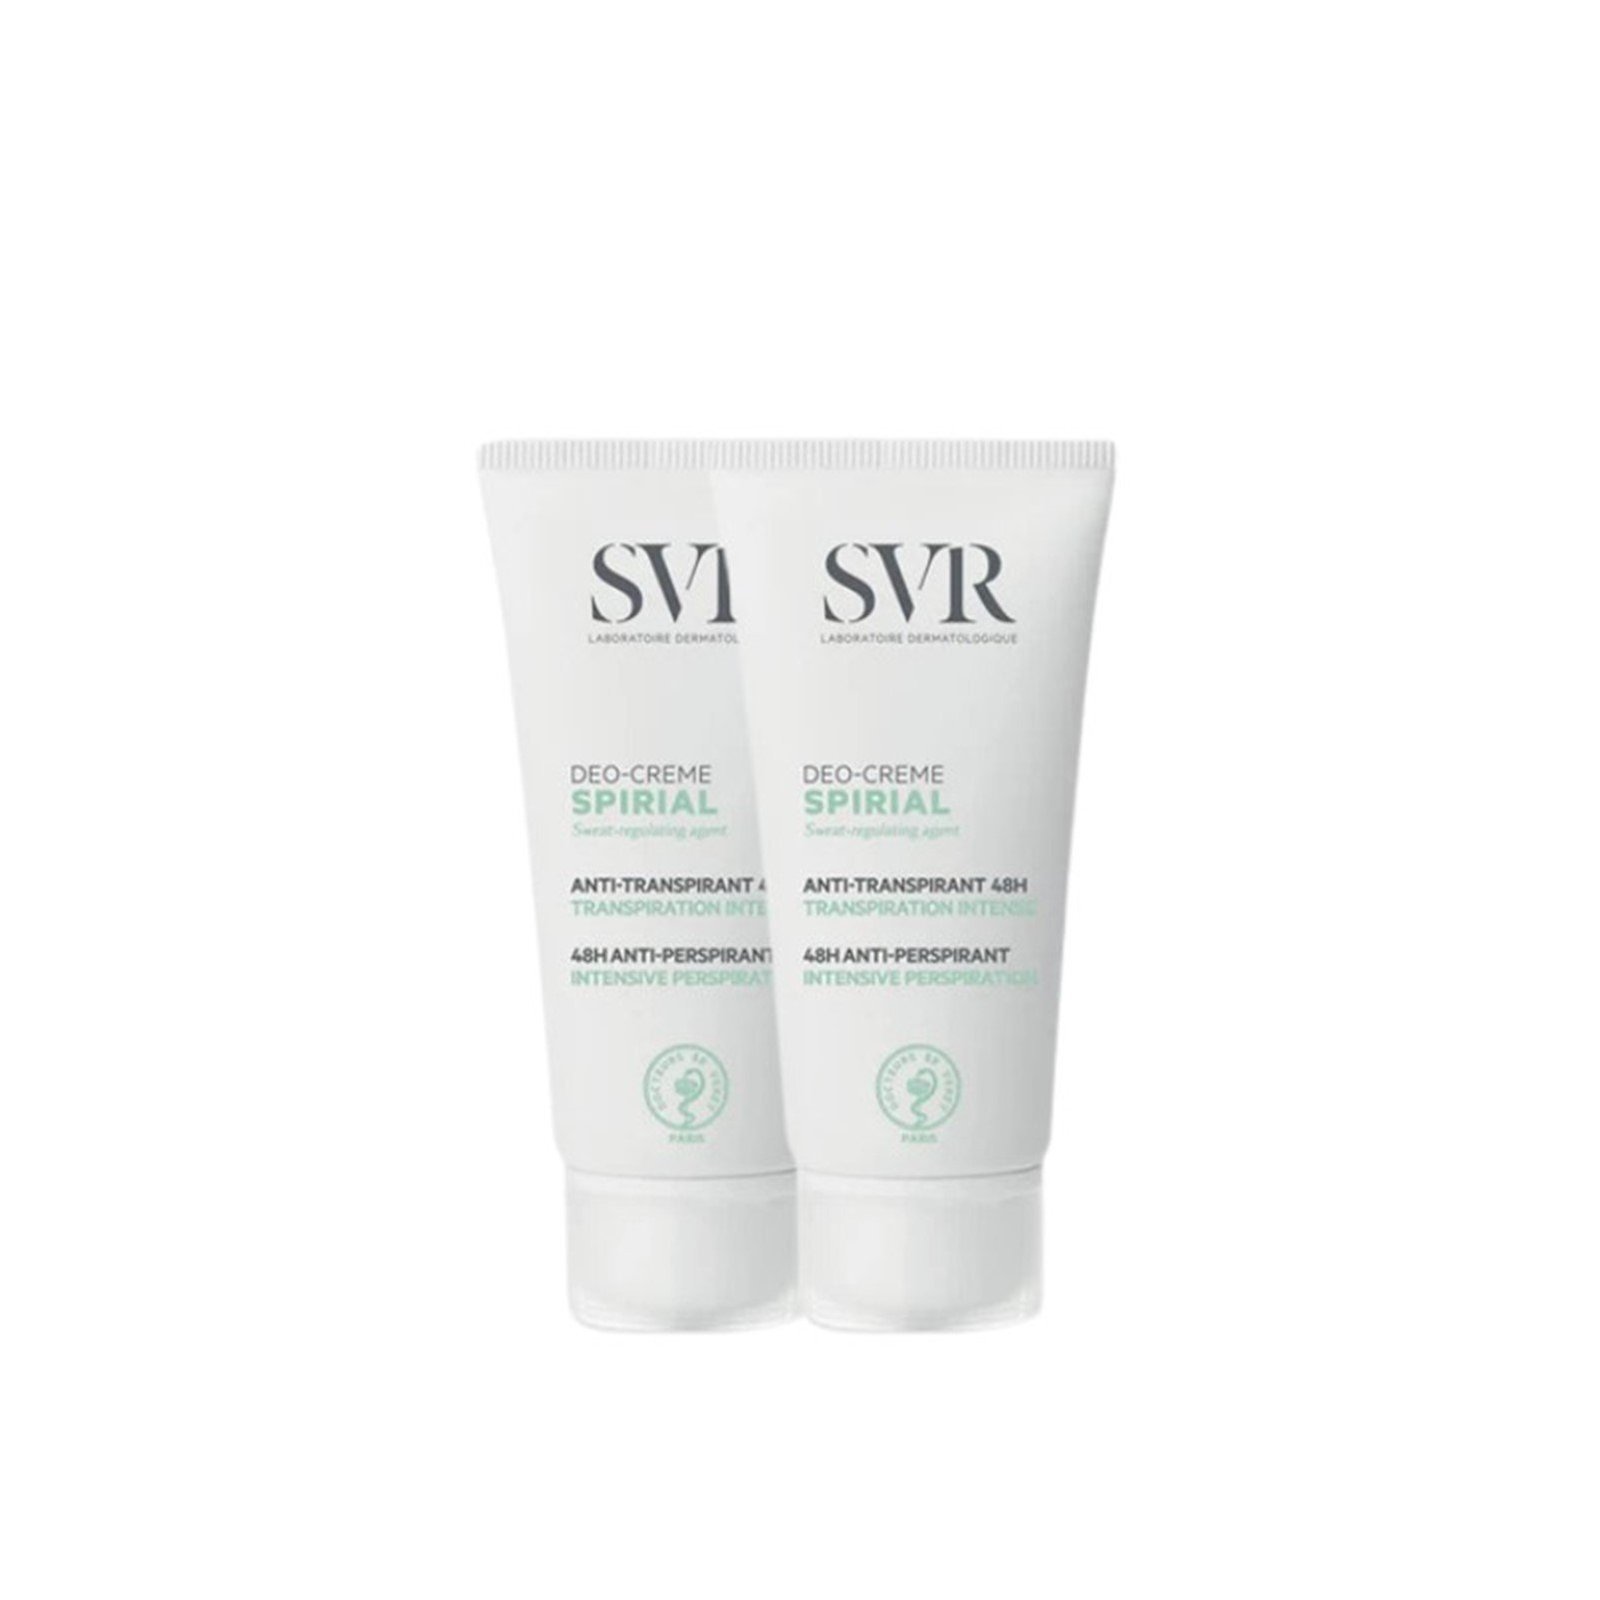 SVR Spirial Cream 48h Intense Anti-Perspirant Deodorant 50ml x2 (2x 1.7 fl oz)